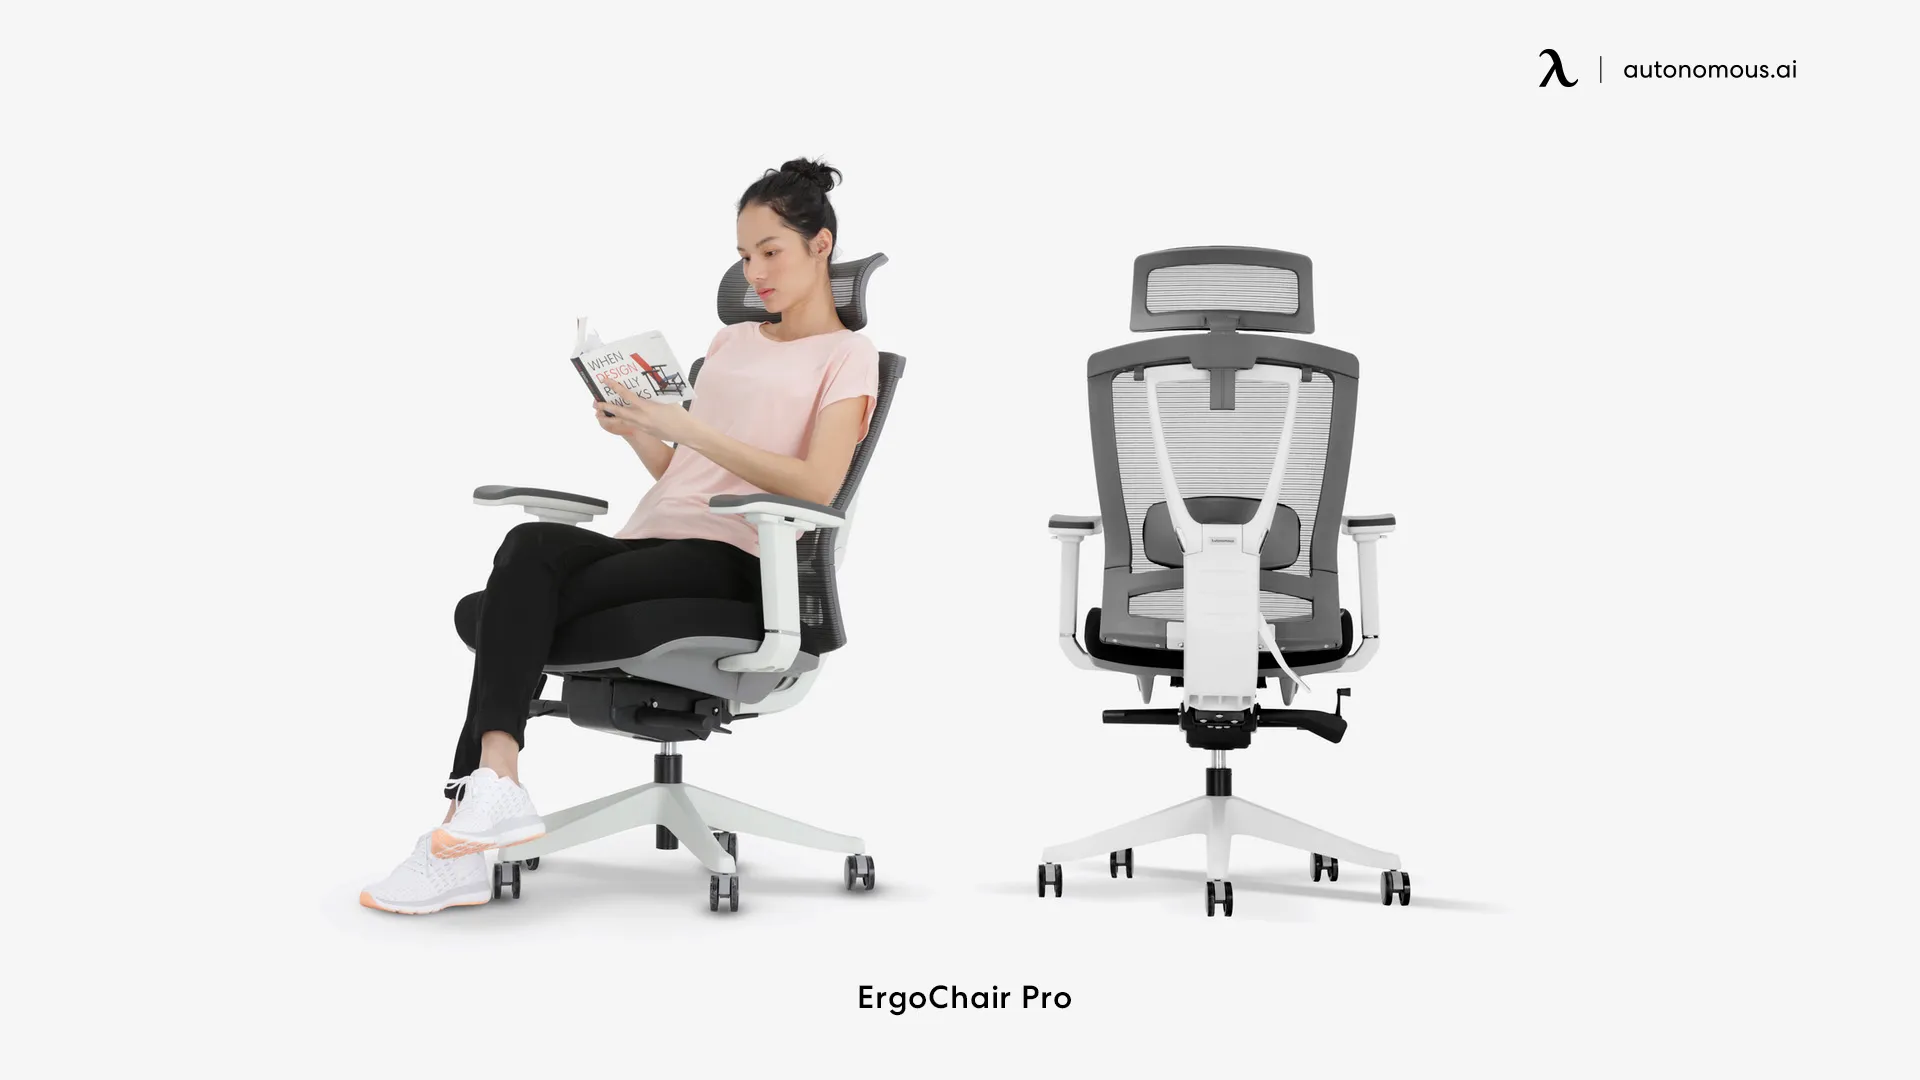 ErgoChair Pro swivel task chair